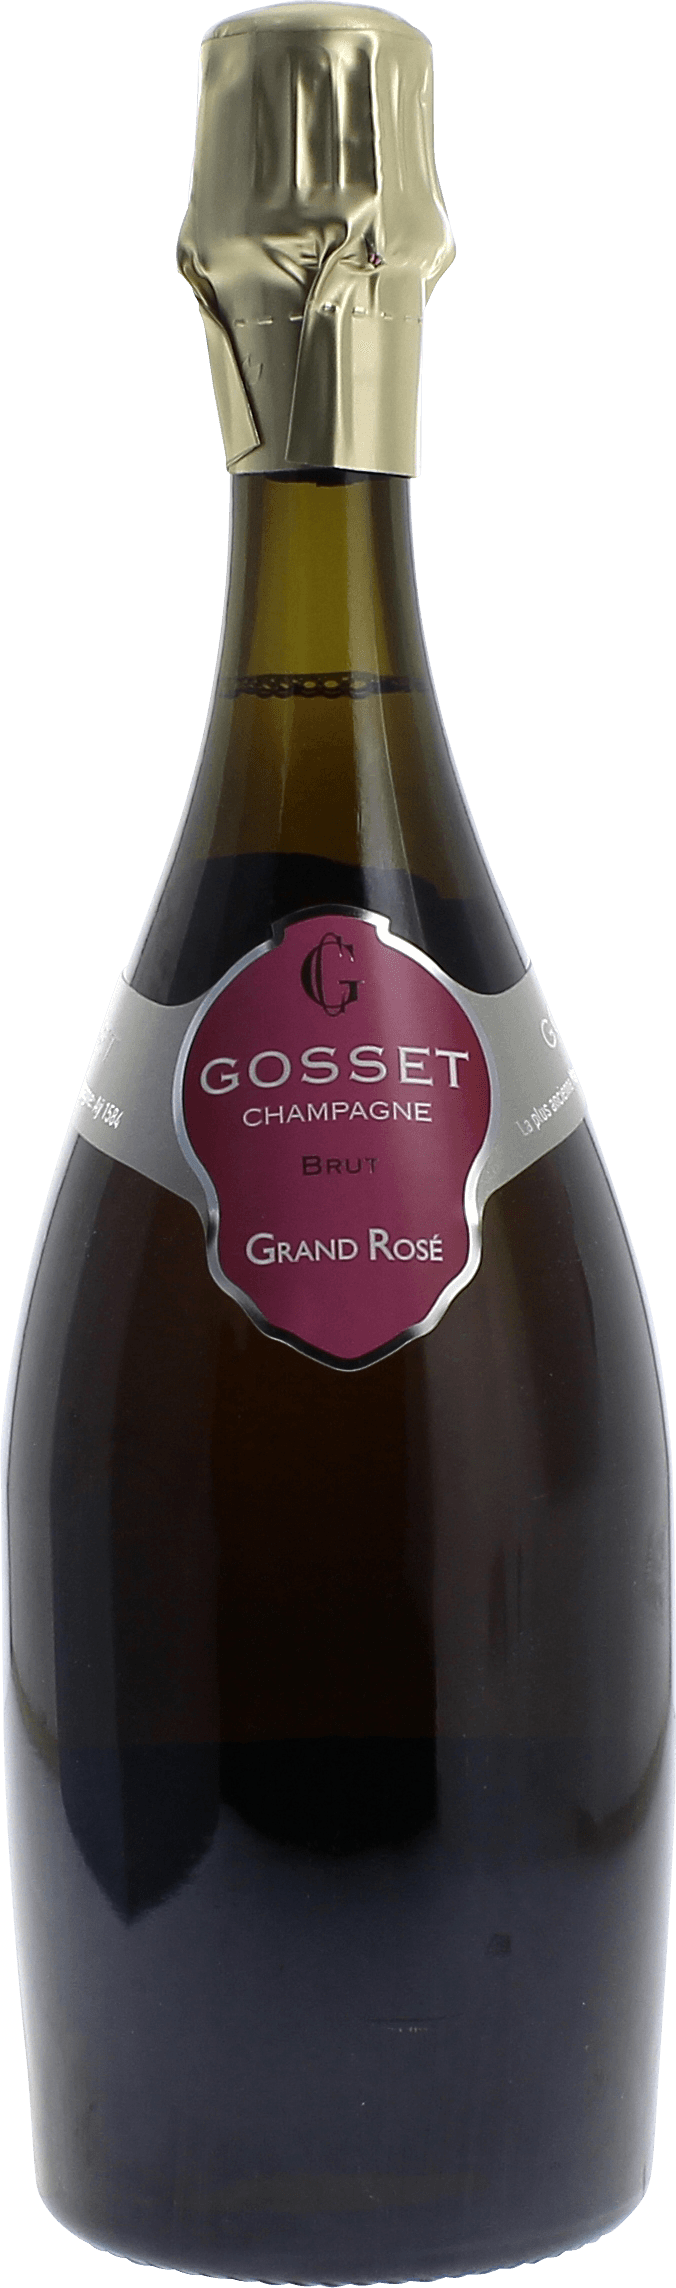 Gosset grand ros brut  Gosset, Champagne